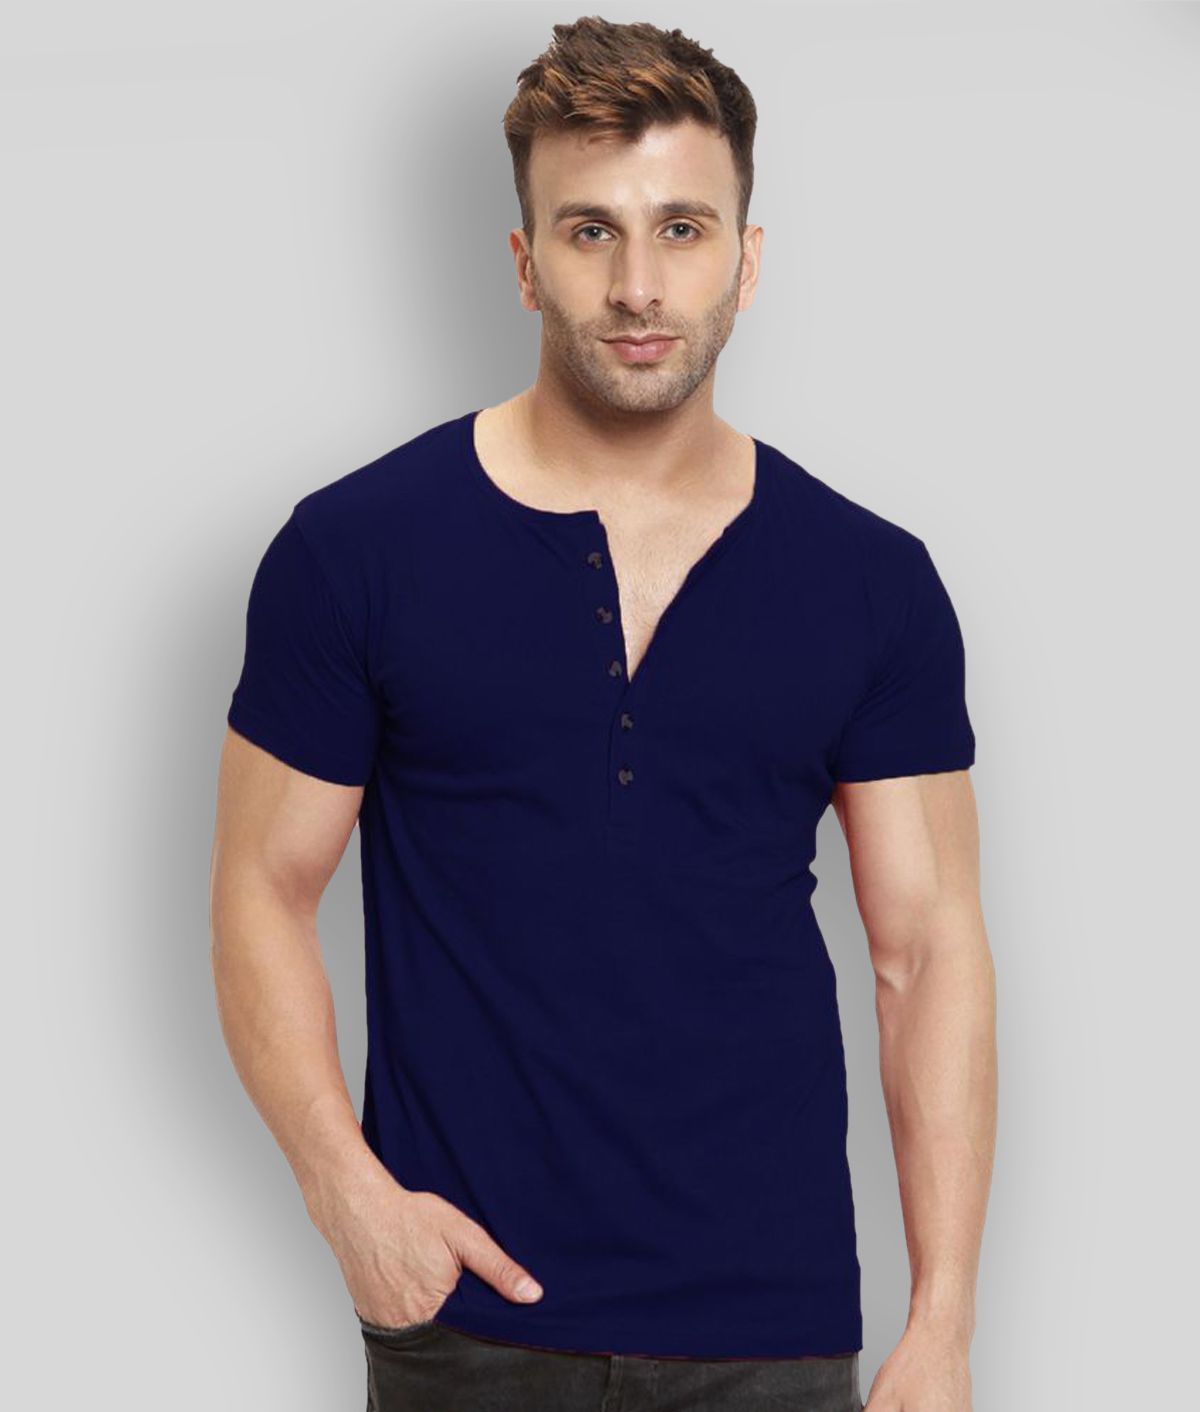     			Leotude - Navy Blue Cotton Regular Fit Men's T-Shirt ( Pack of 1 )